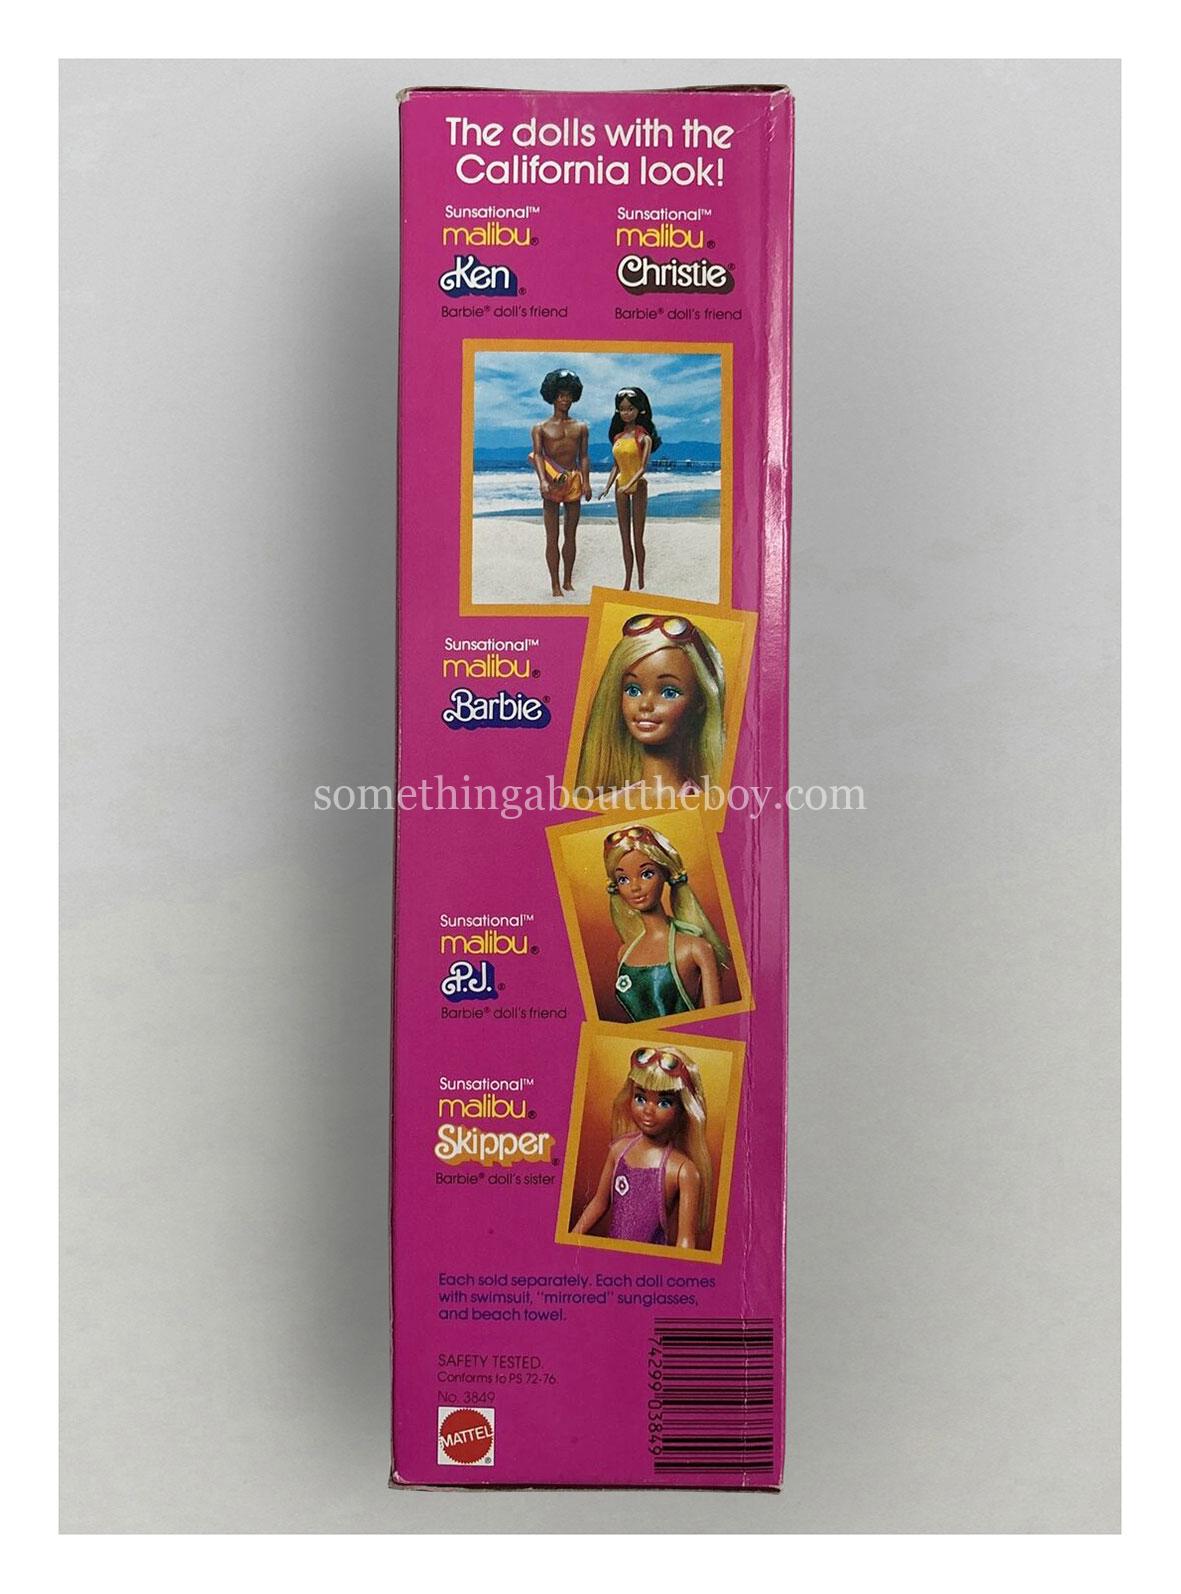 #3849 Sunsational Malibu Ken original packaging